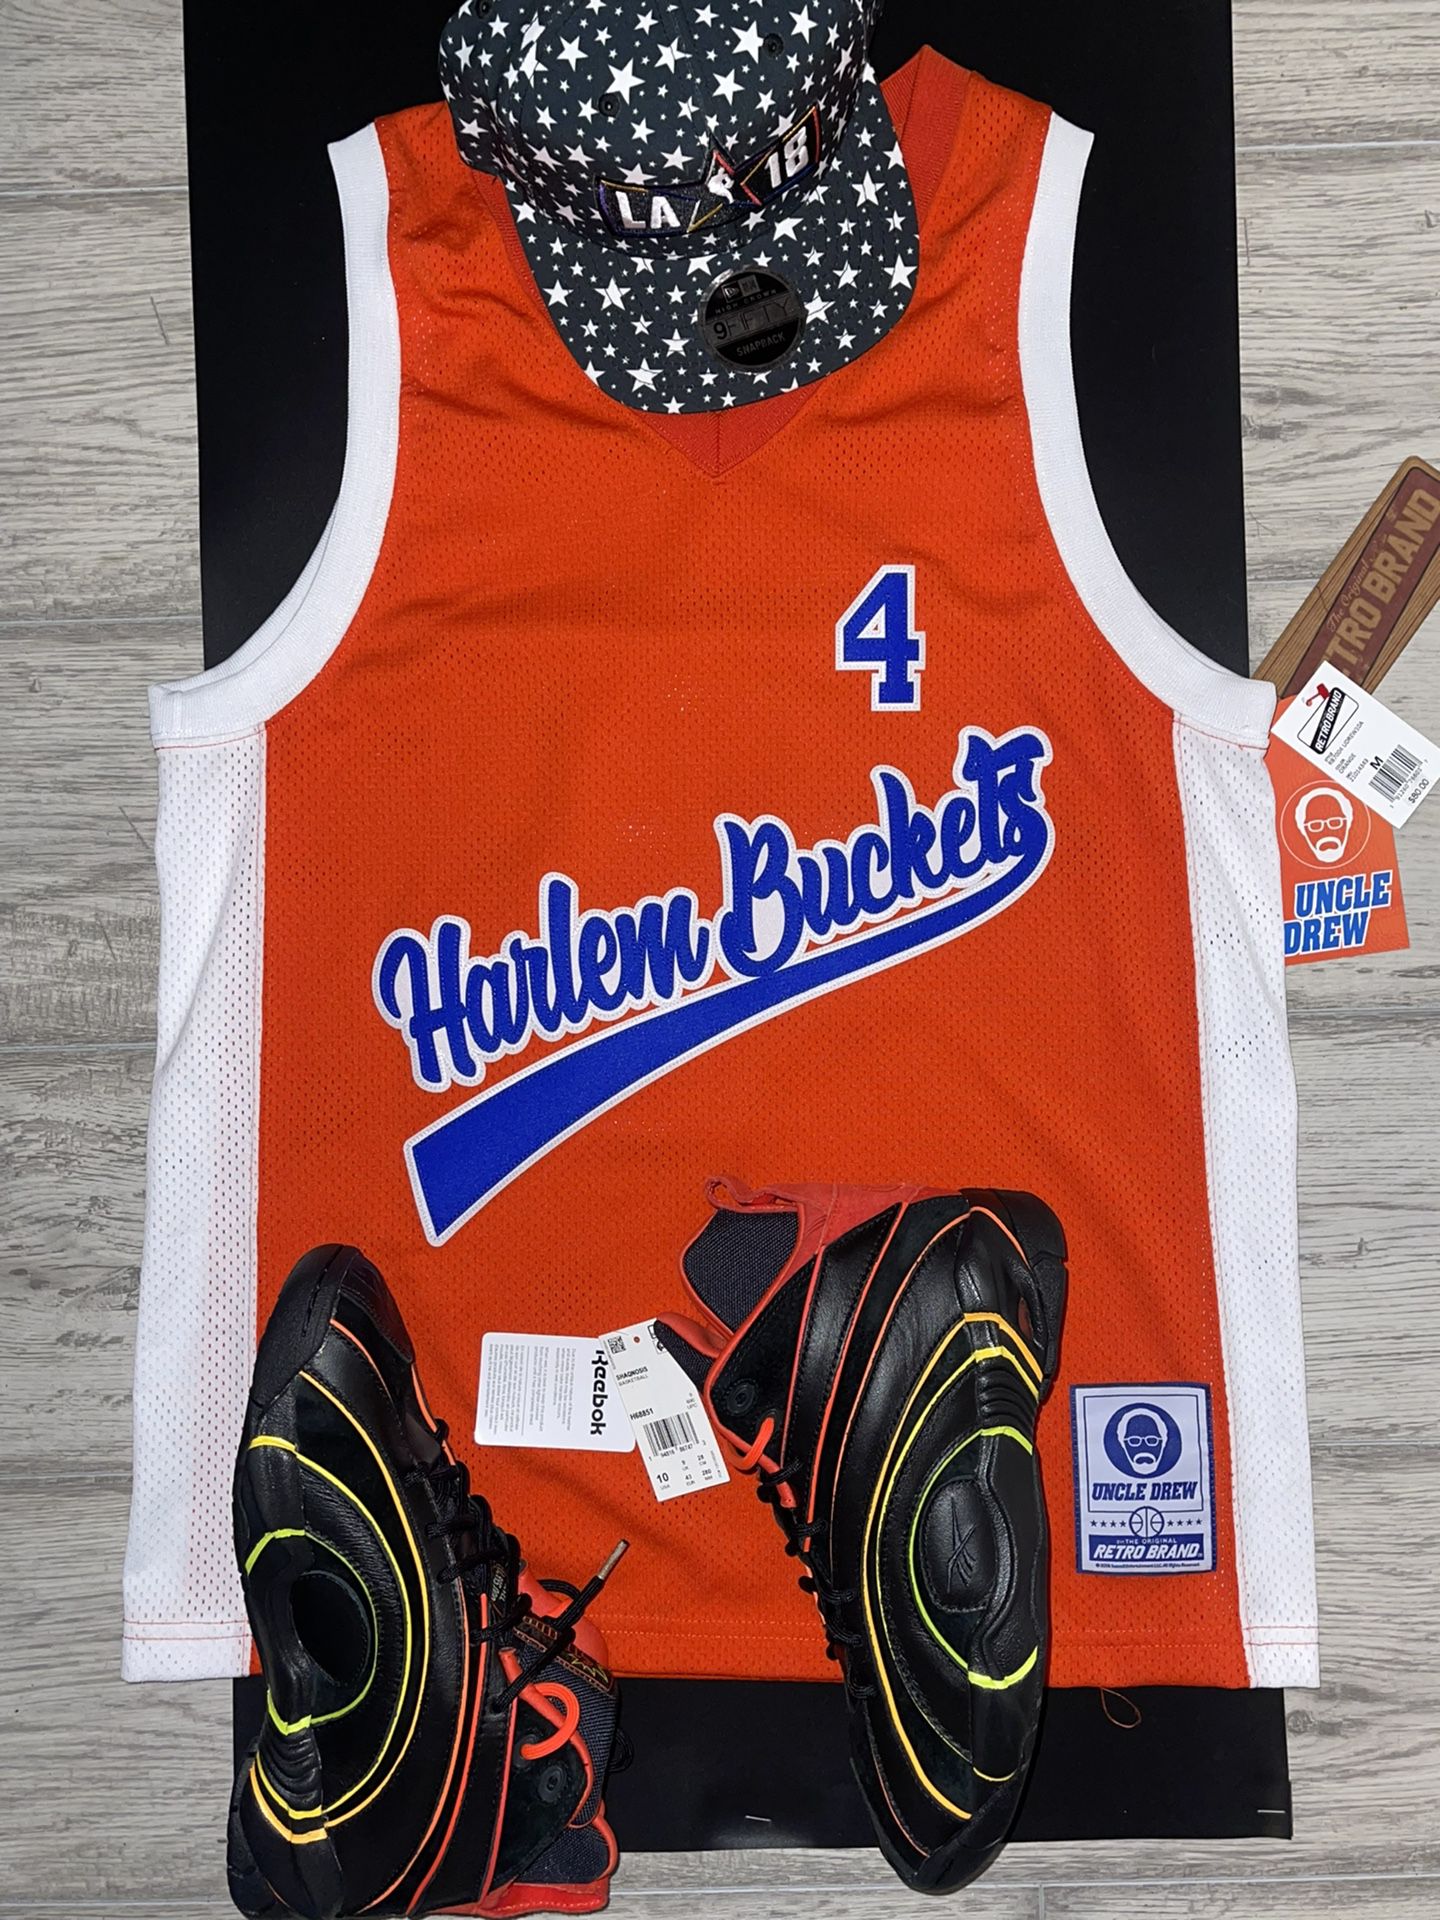 HALLOWEEN Basketball fit Kyrie Harlem Buckets Shaqnosis shoes LA All Star cap⭐️